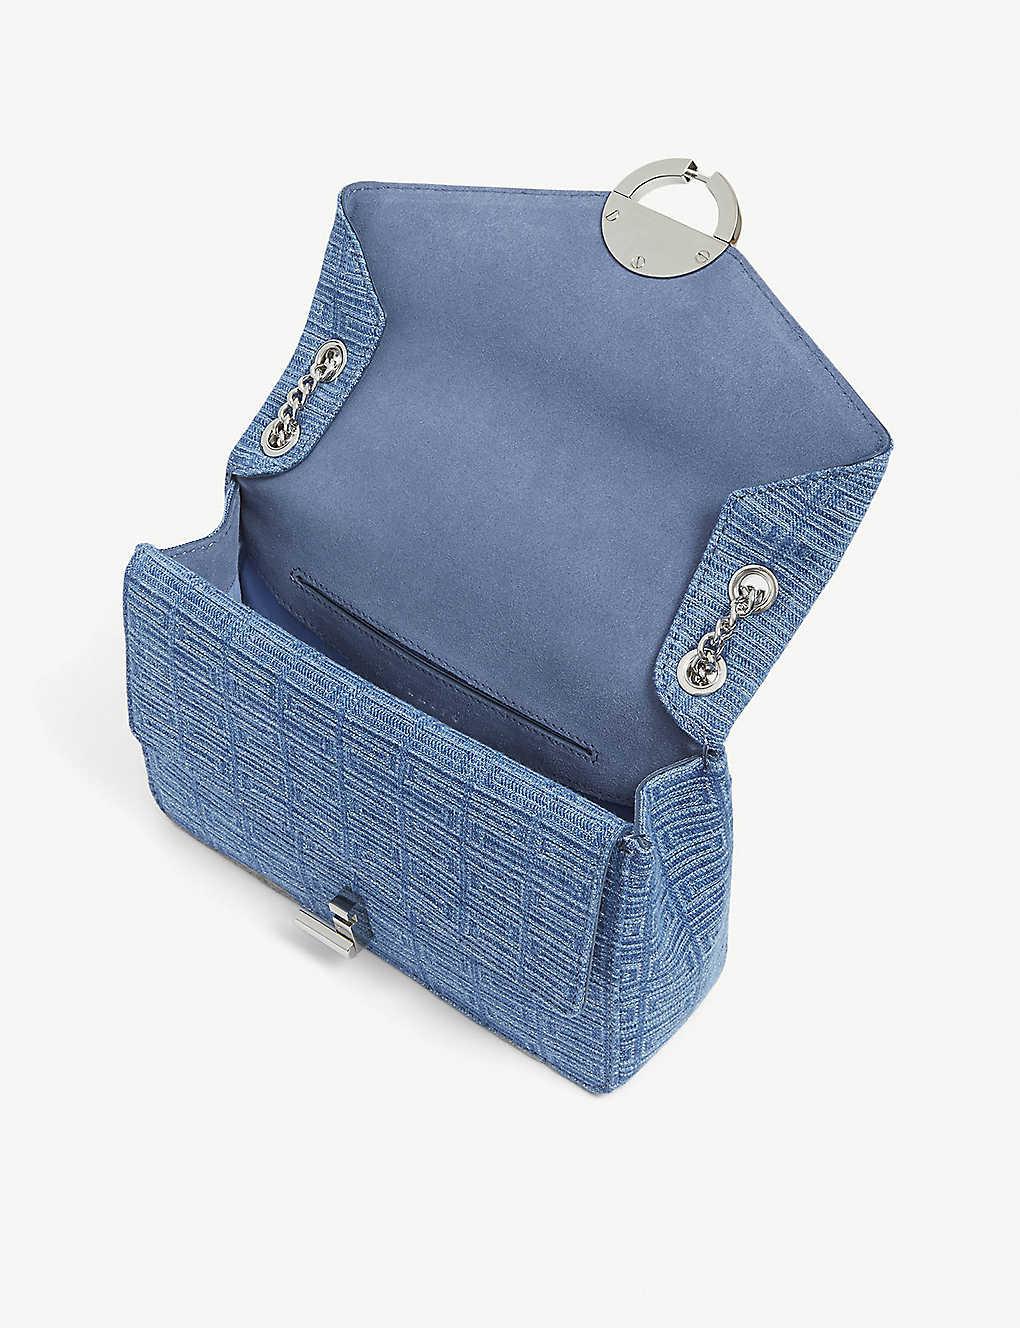 Sandro Yza Printed Denim Shoulder Bag in Blue | Lyst